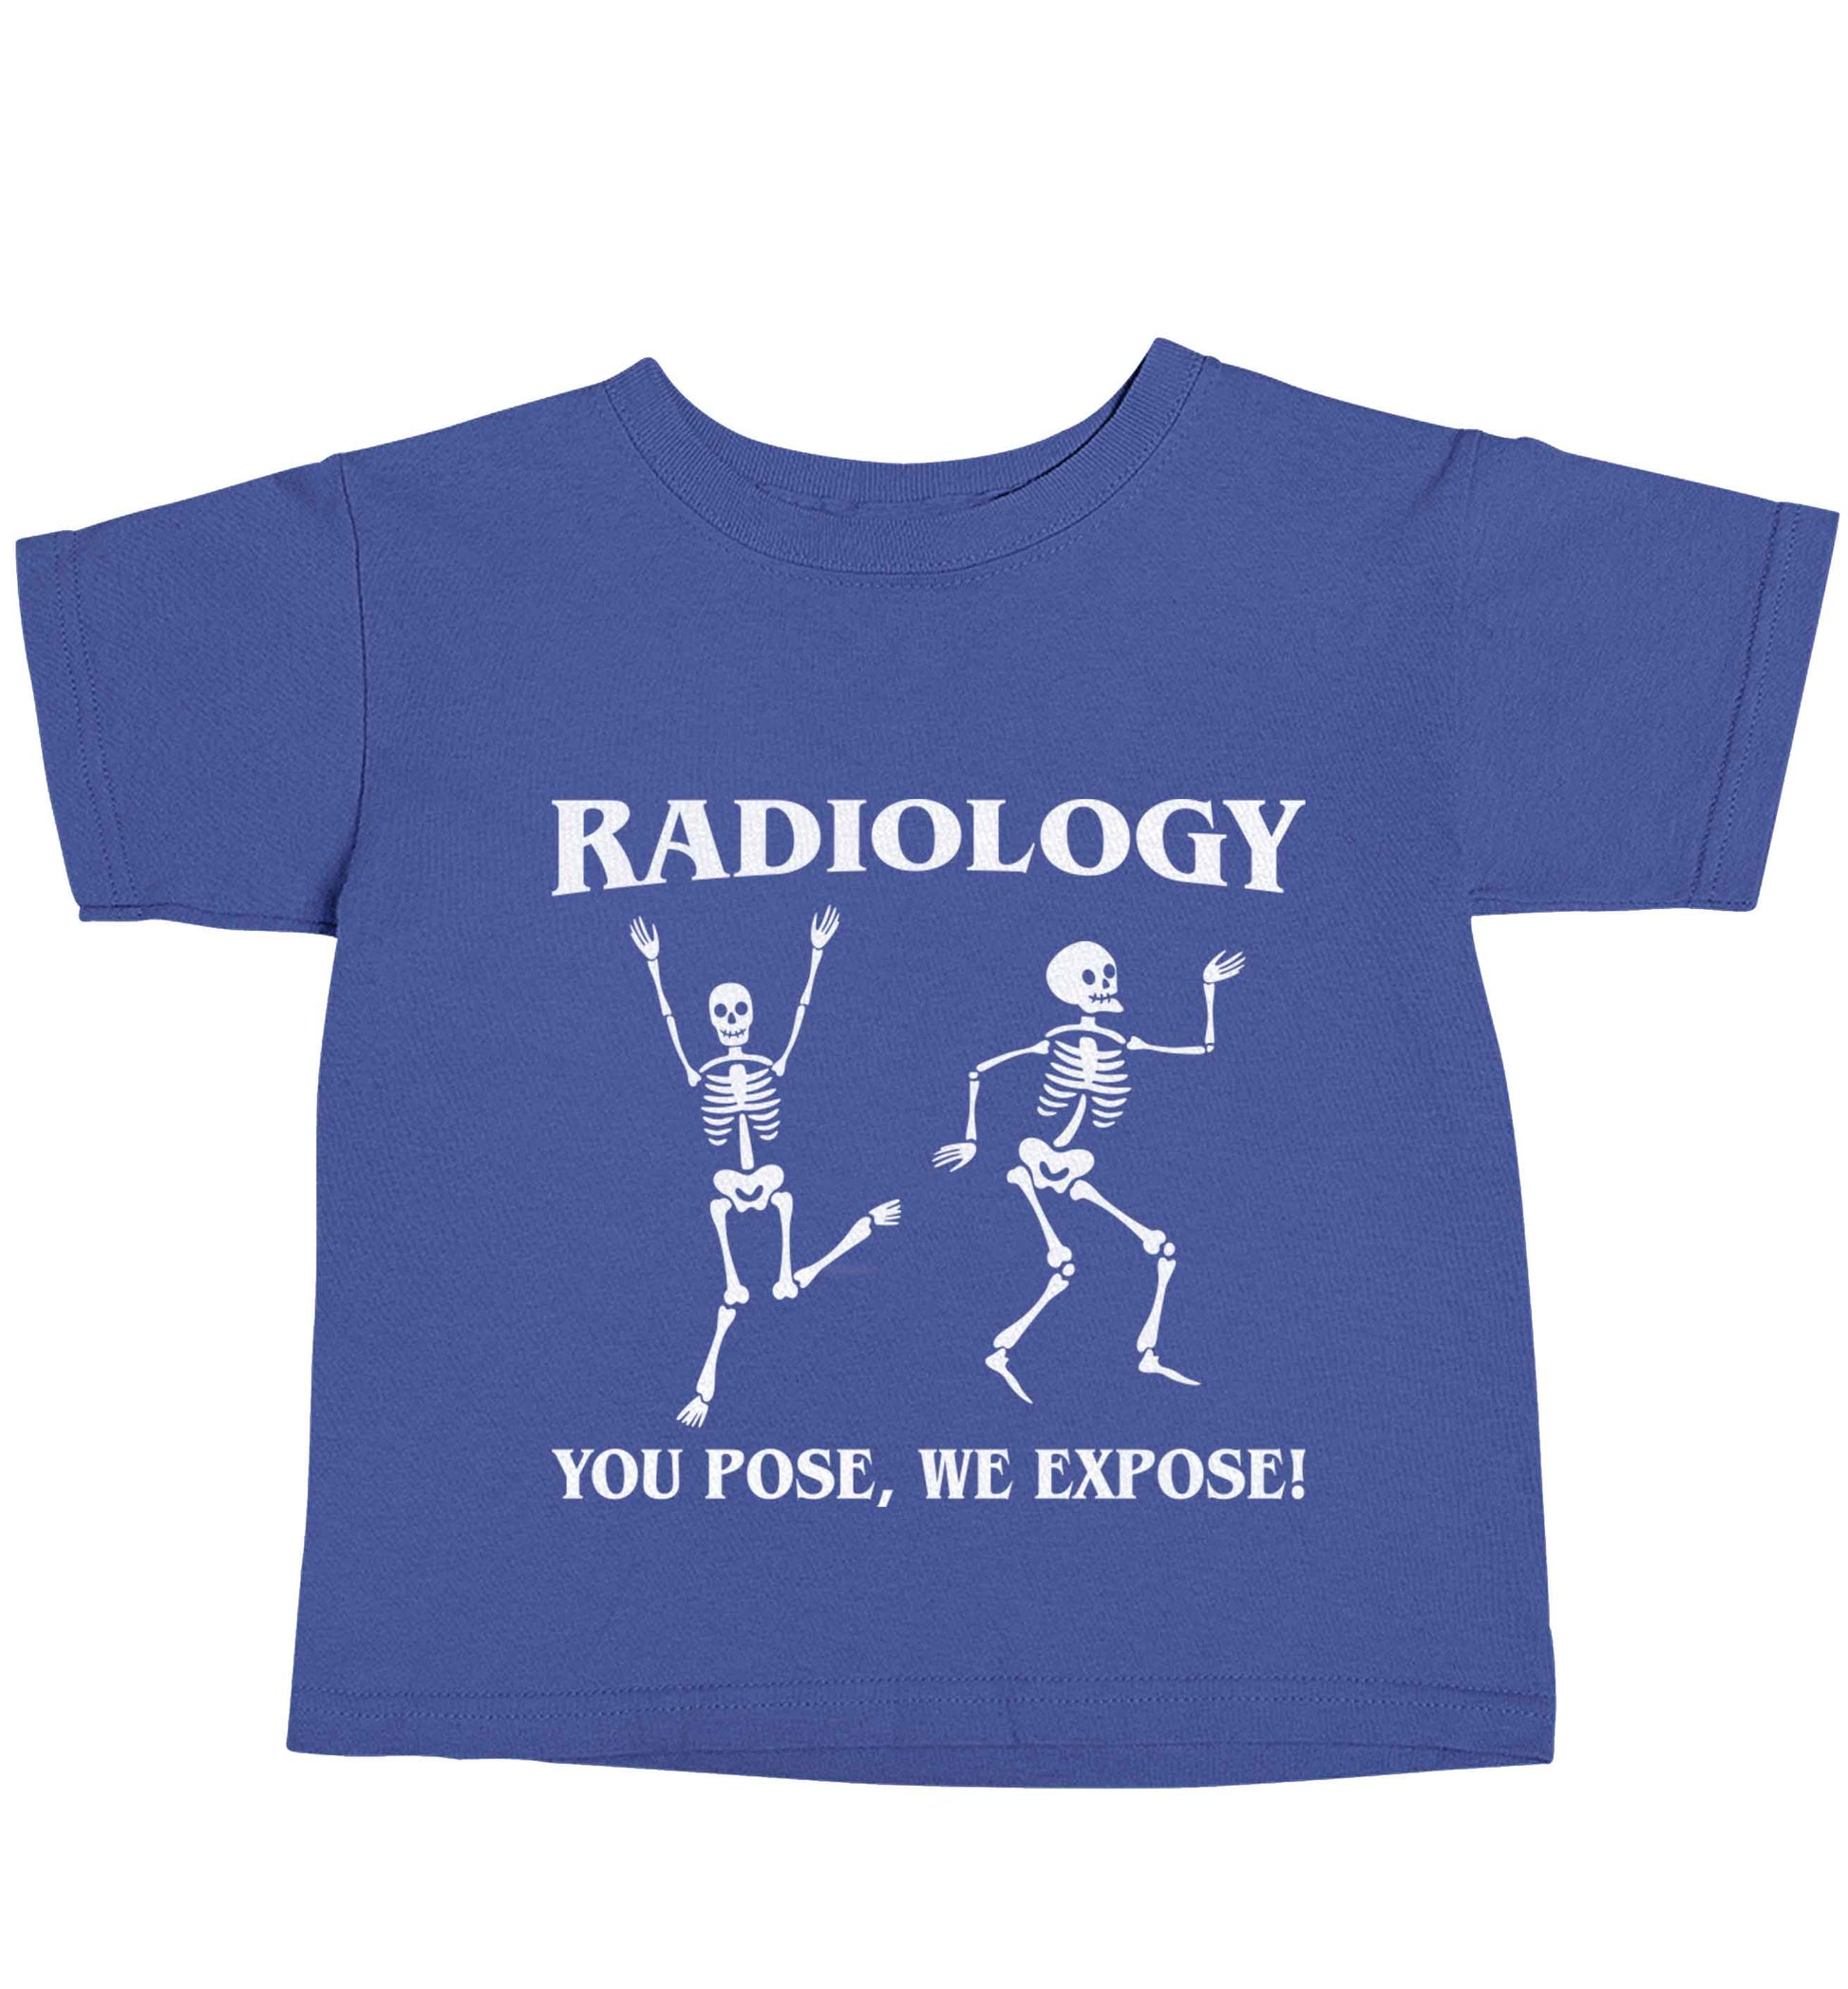 Radiology you pose we expose blue baby toddler Tshirt 2 Years